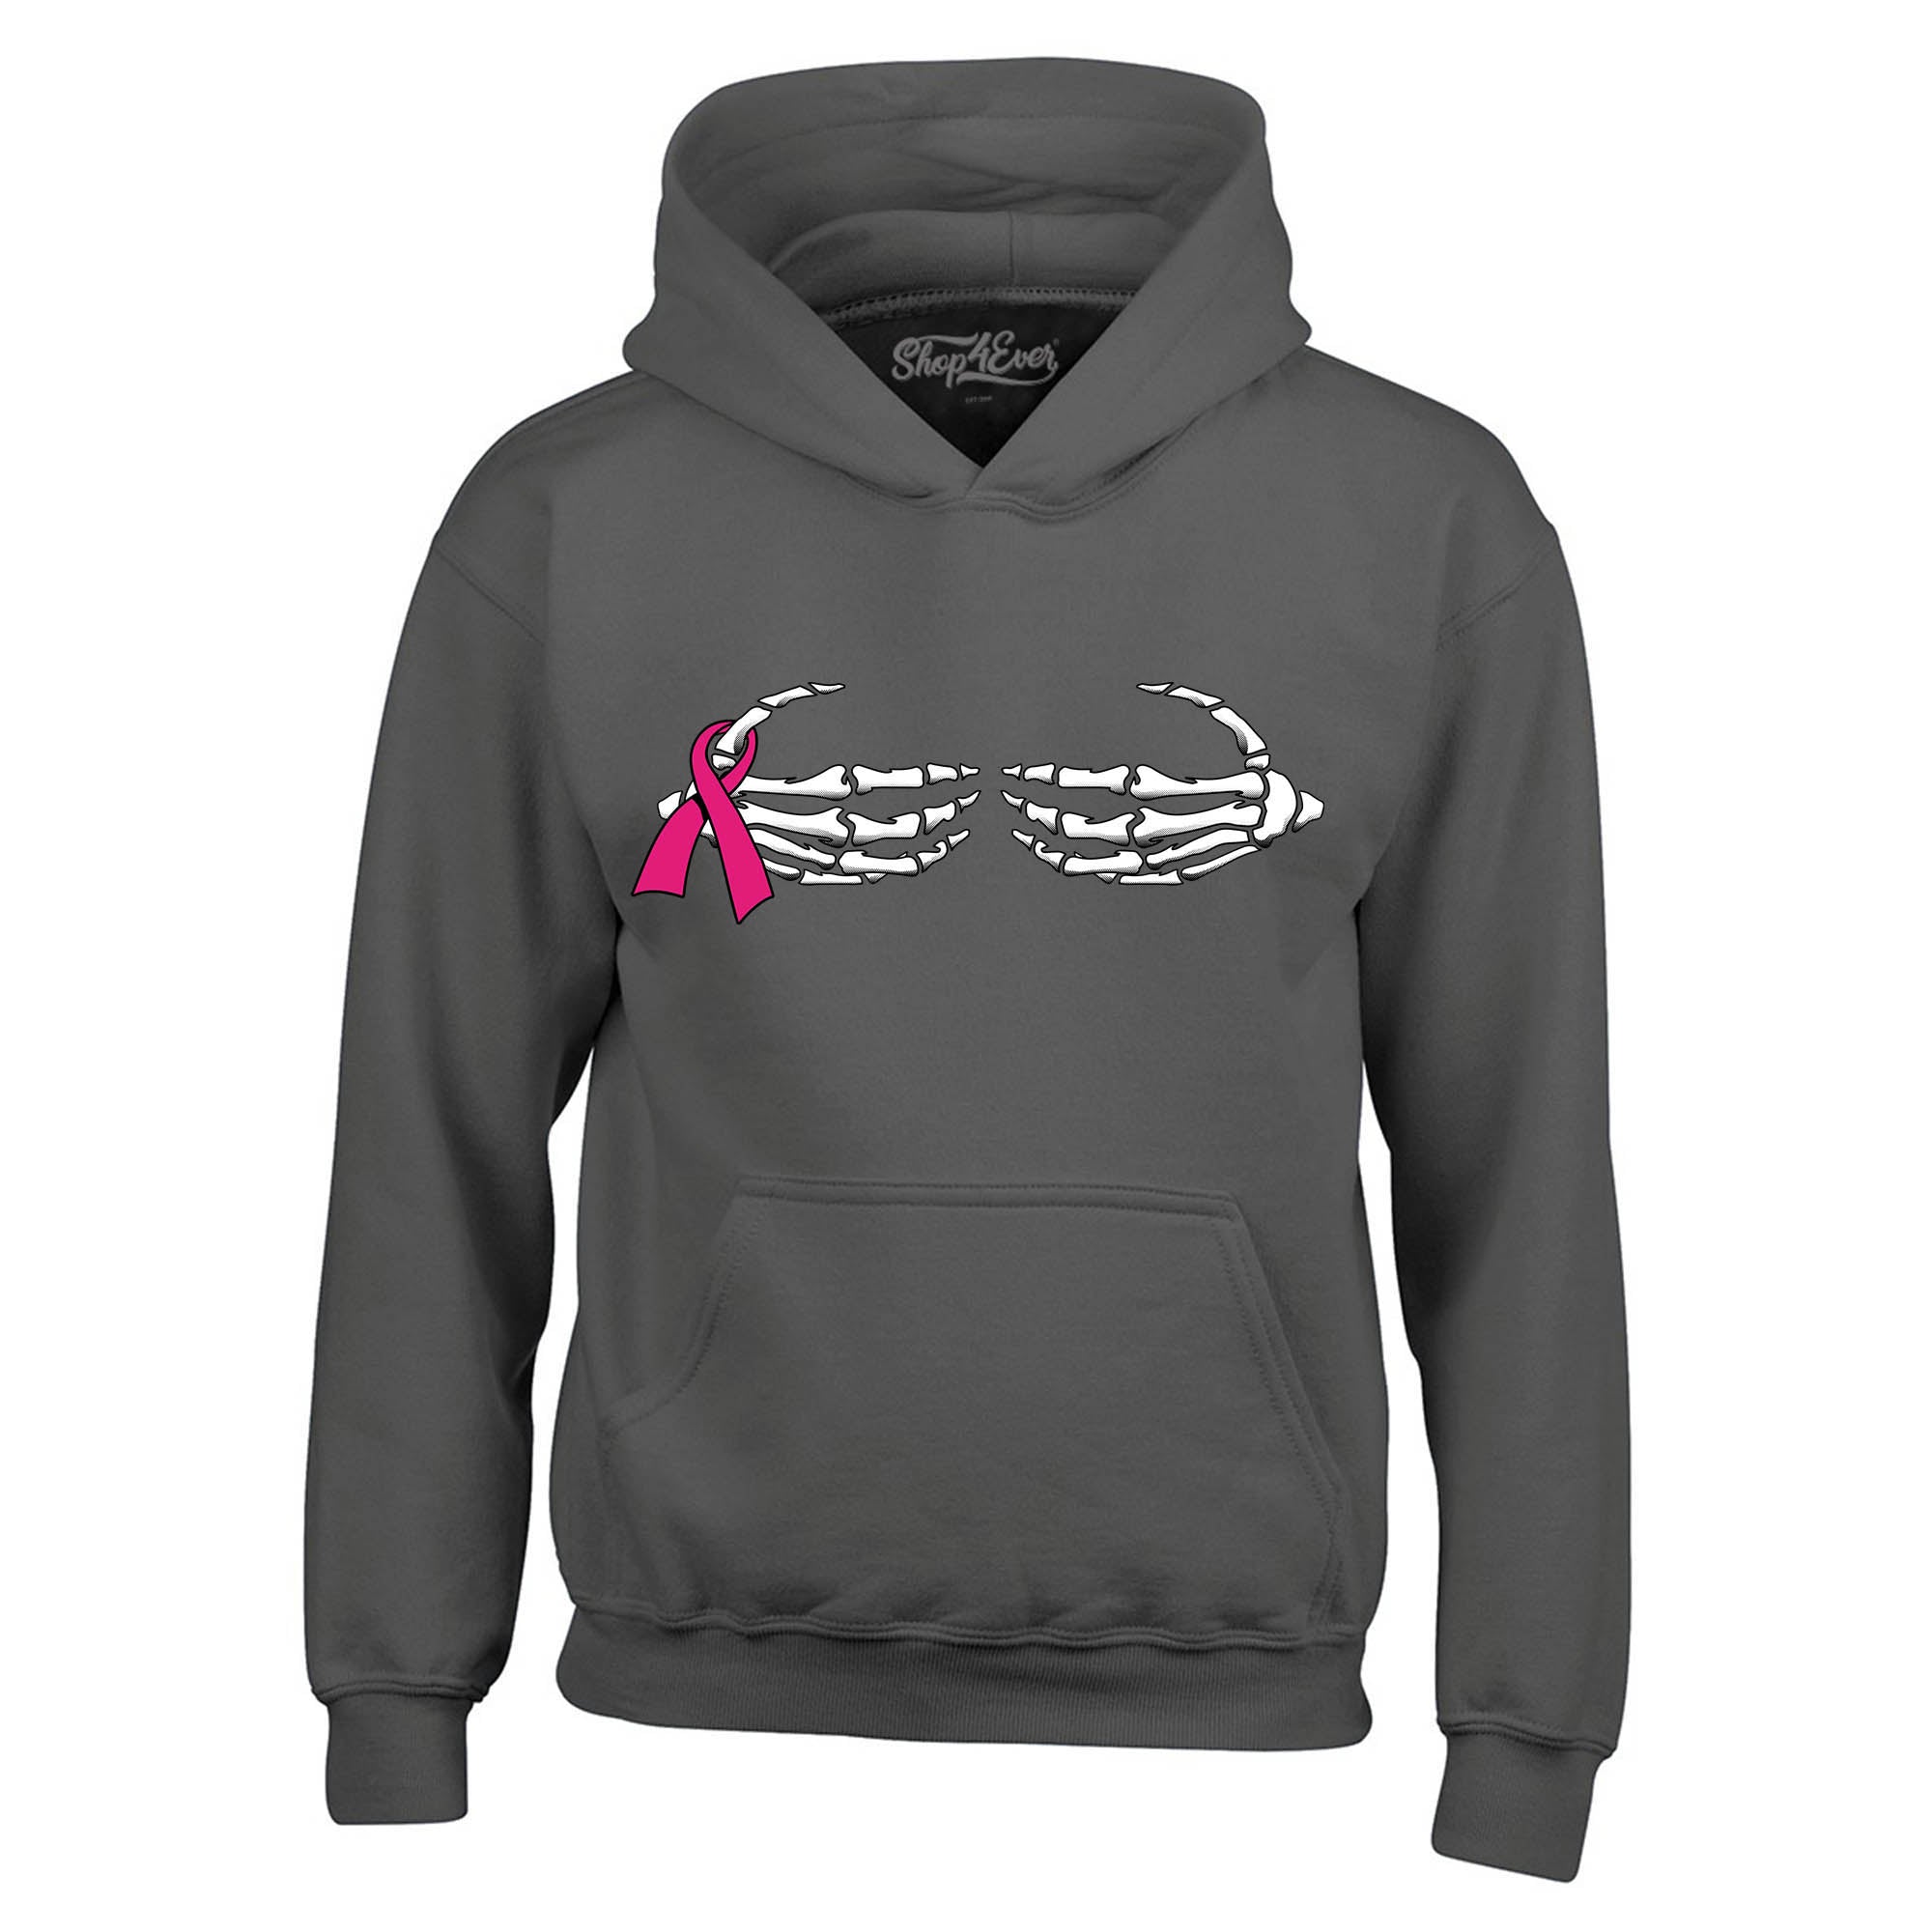 Skeleton Hands Hoodies Breast Cancer Awareness Sweatshirts